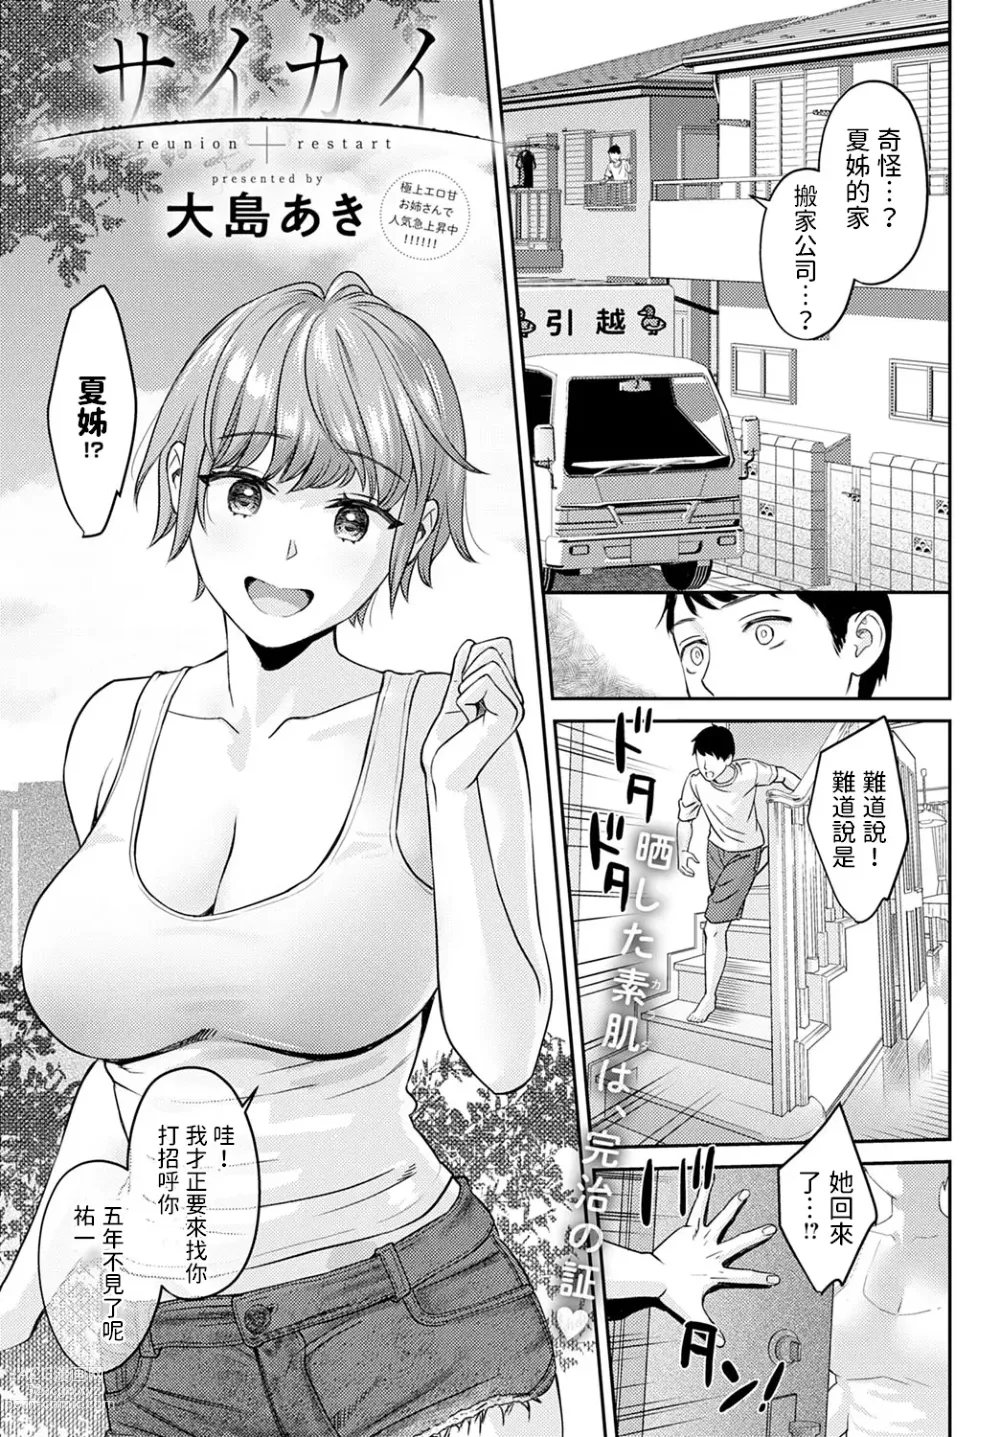 Page 3 of manga Saikai - reunion + restart